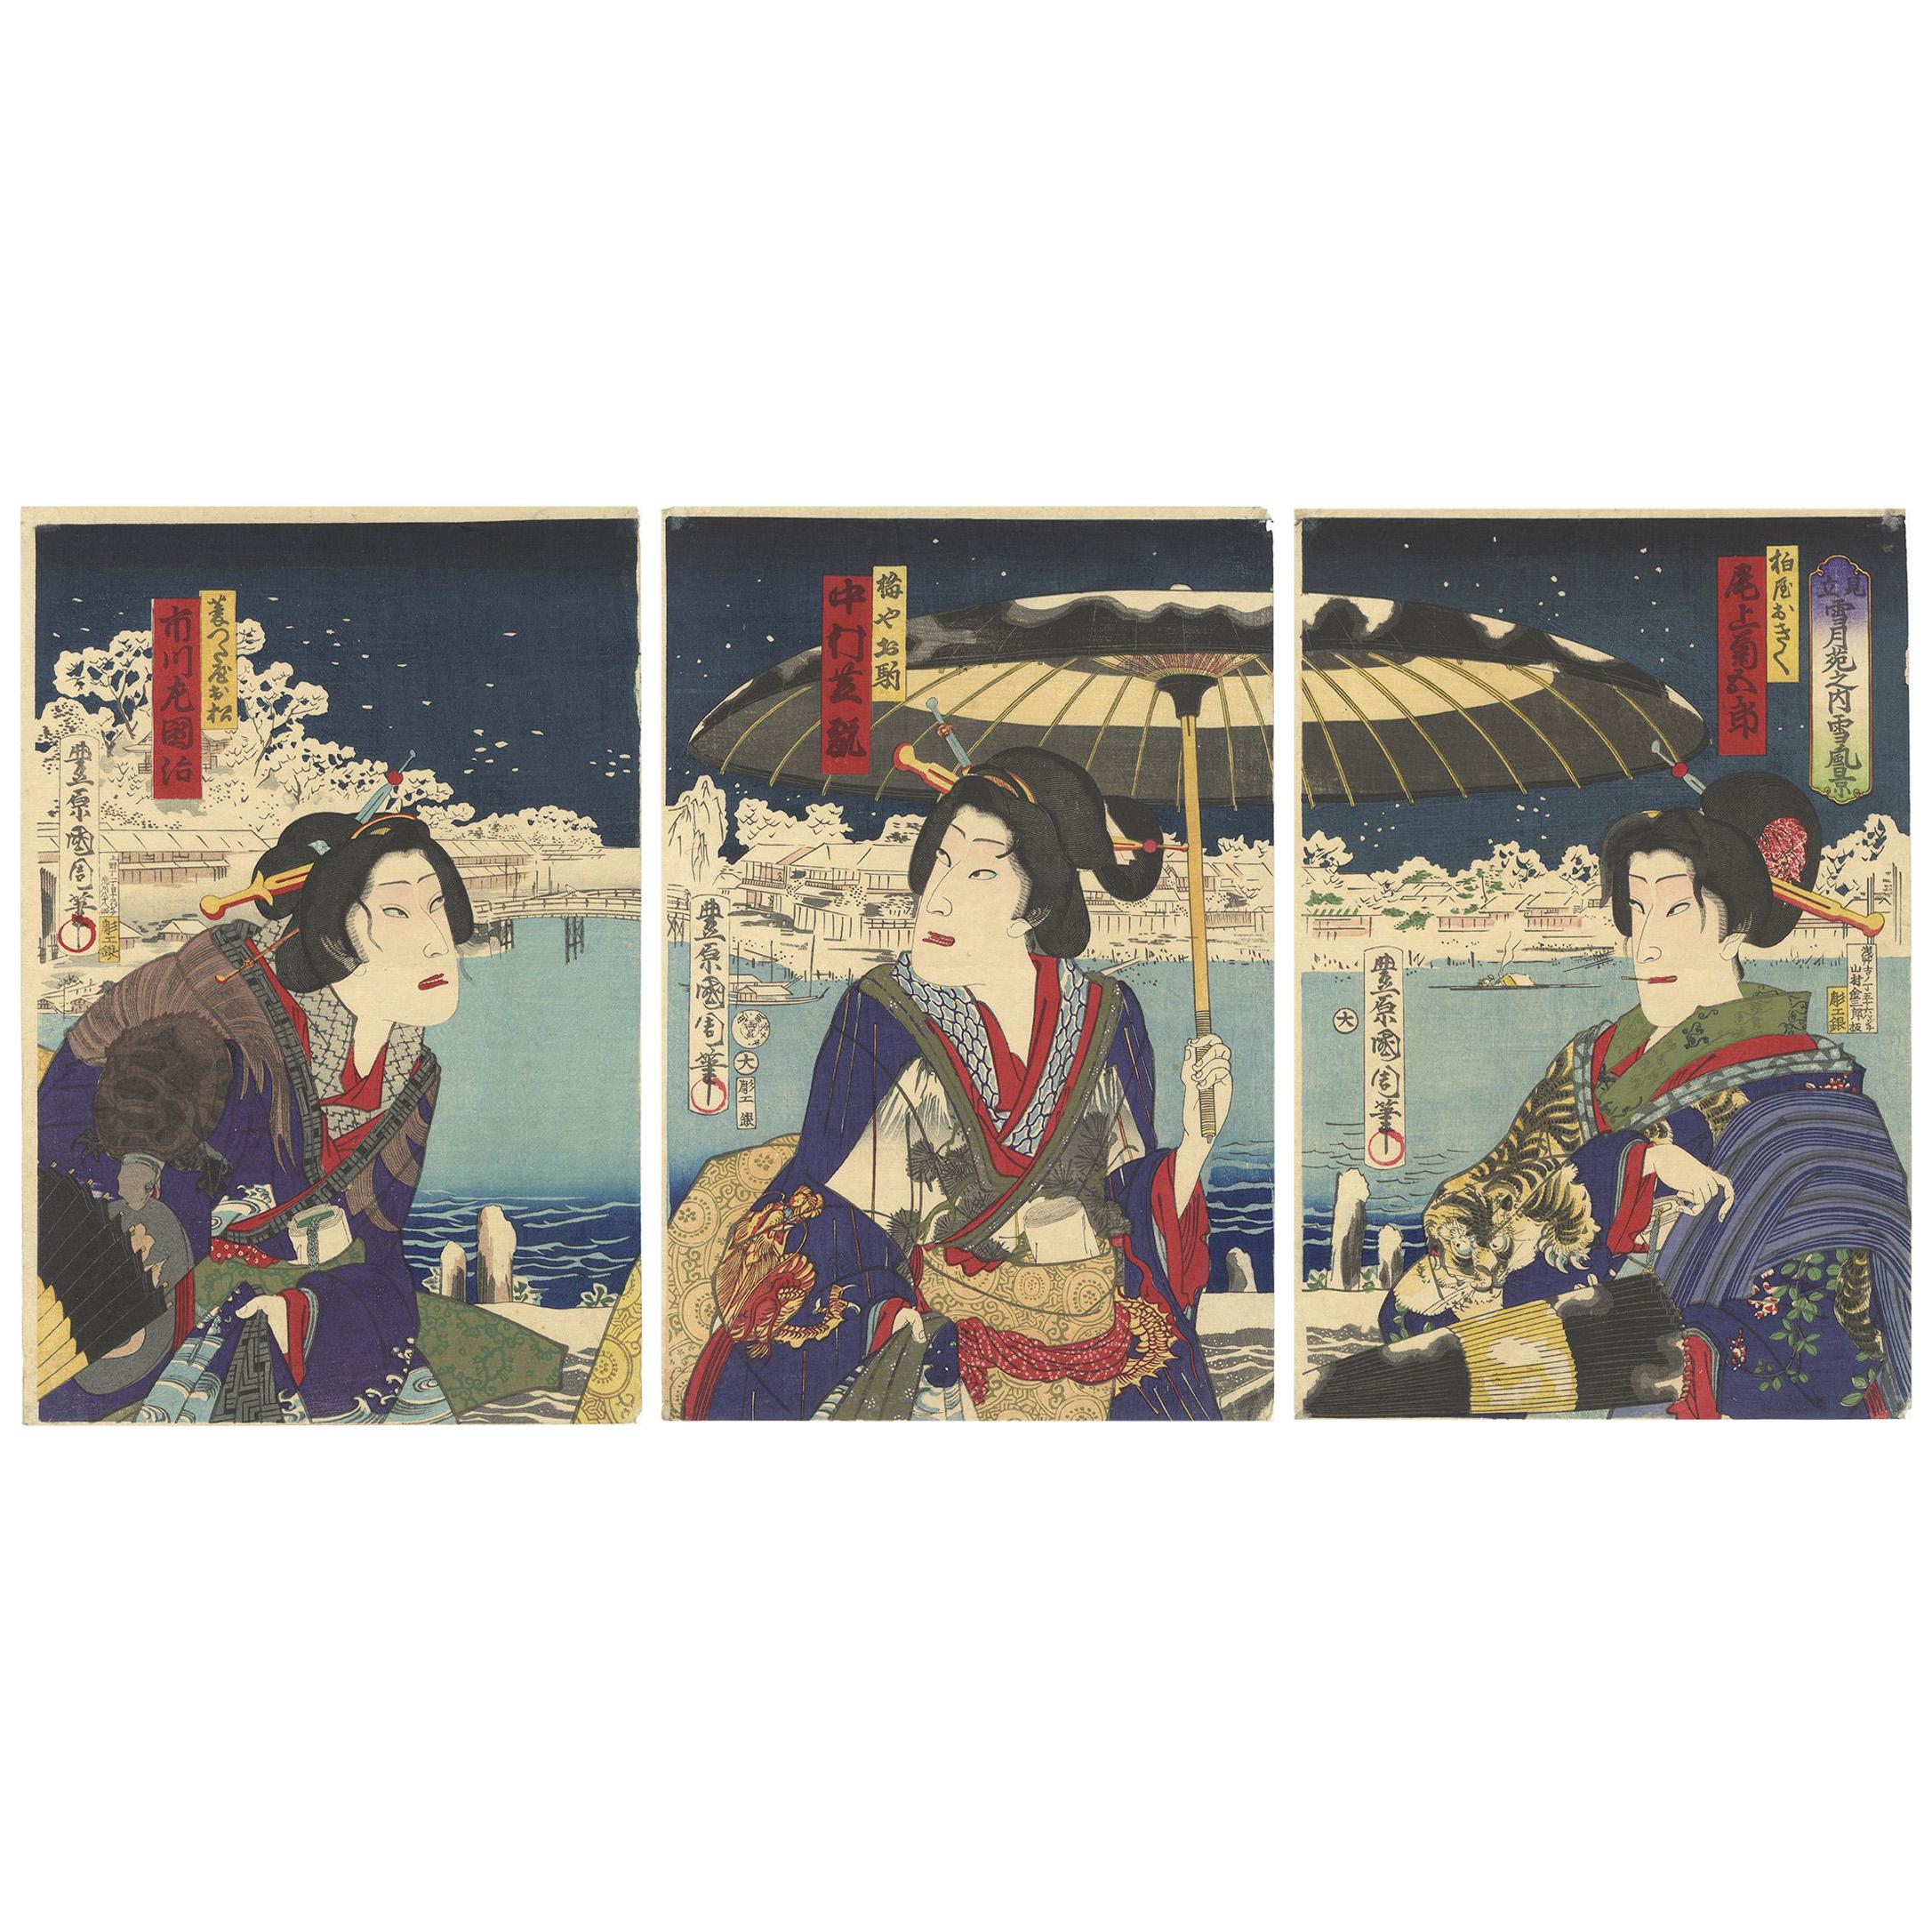 Snow, Geisha, Original Japanese Woodblock Print, Japanese Mythology, Ukiyo-e Art For Sale